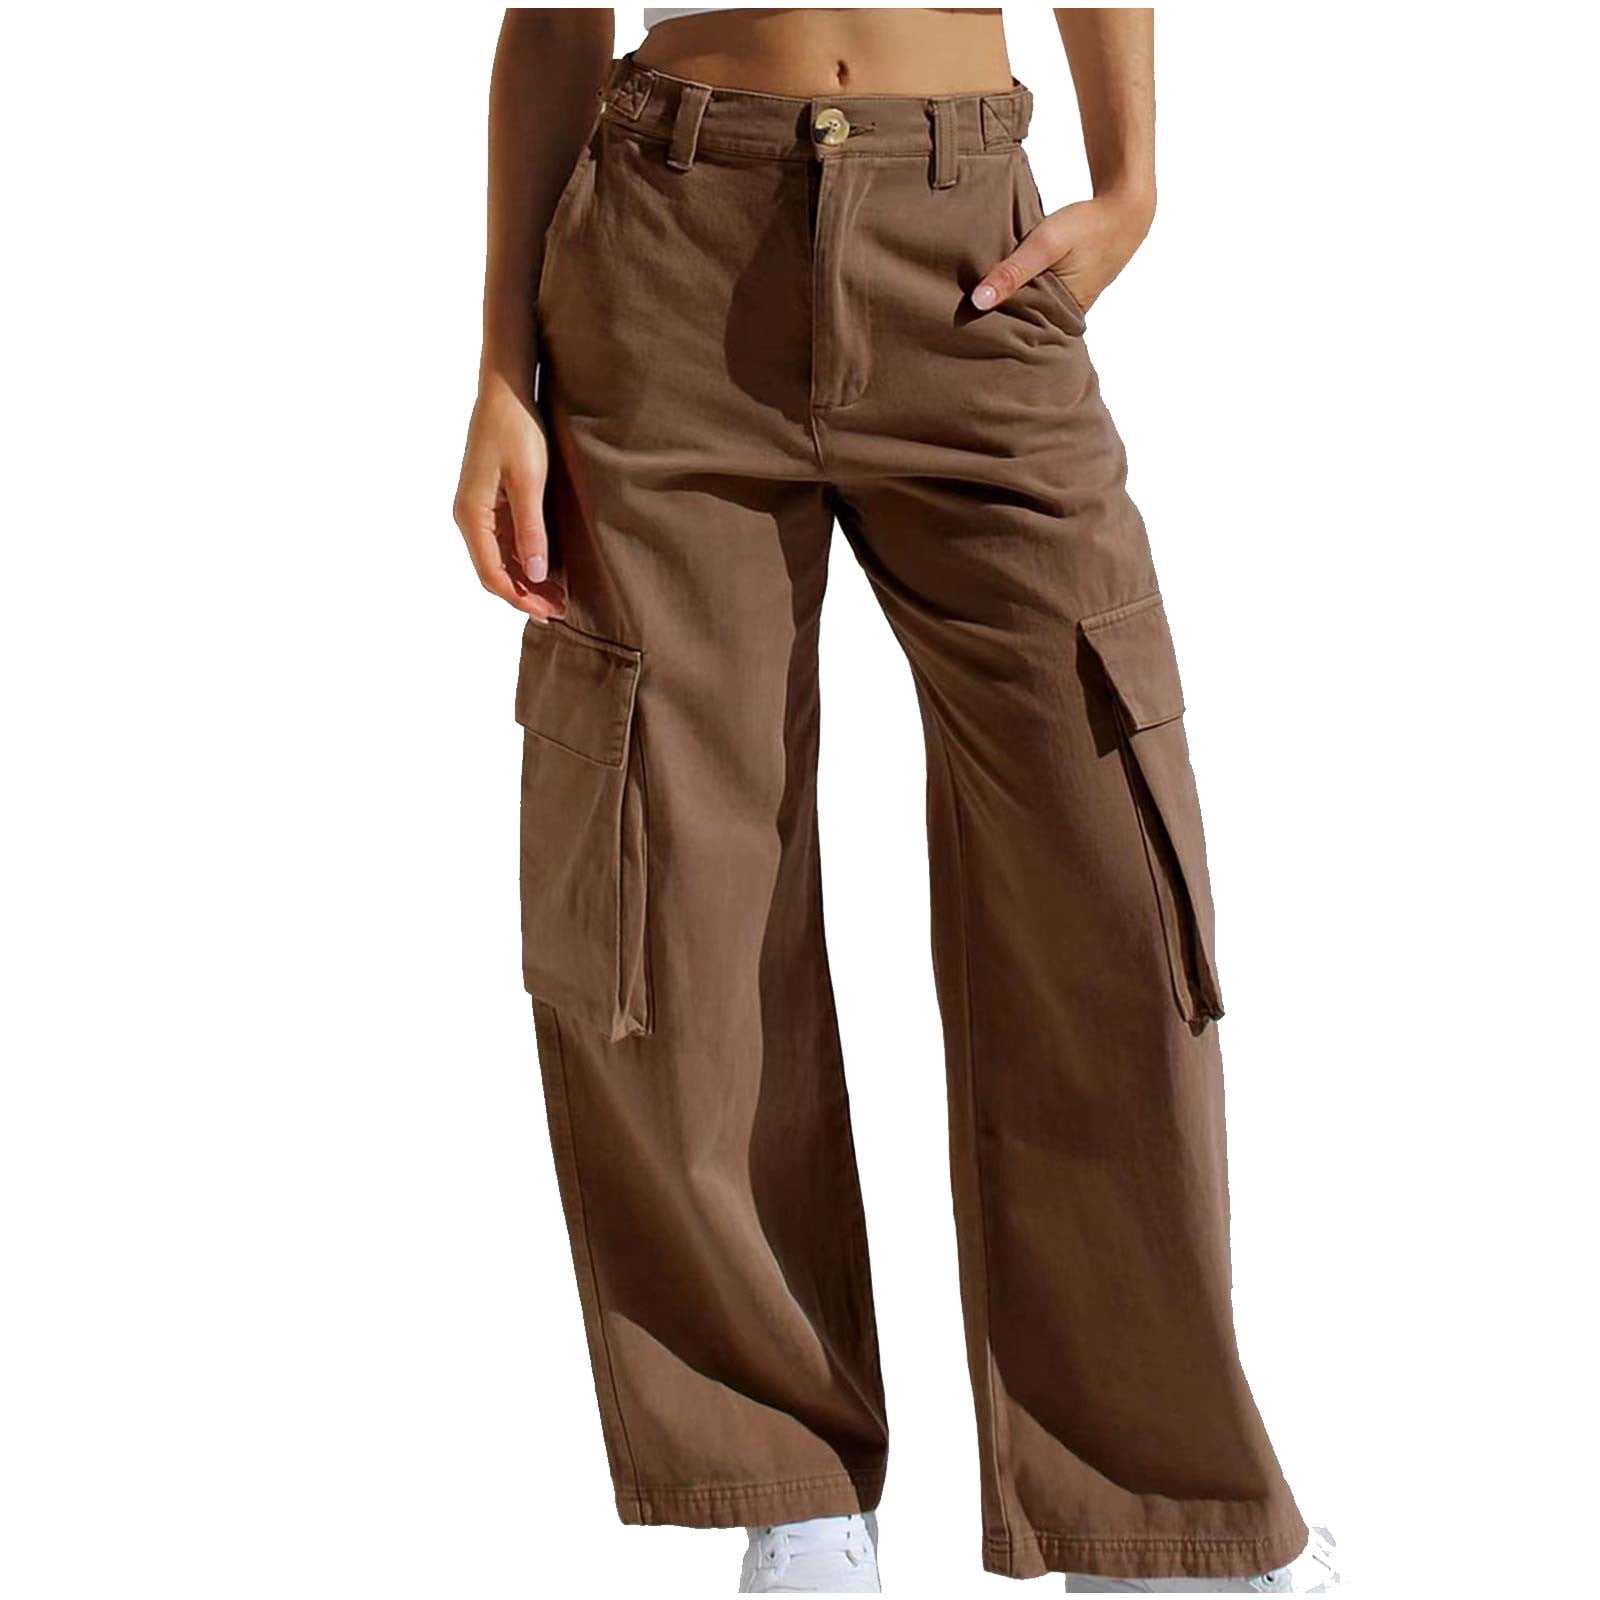 XFLWAM Women's High Waisted Cargo Baggy Jeans Flap Pocket